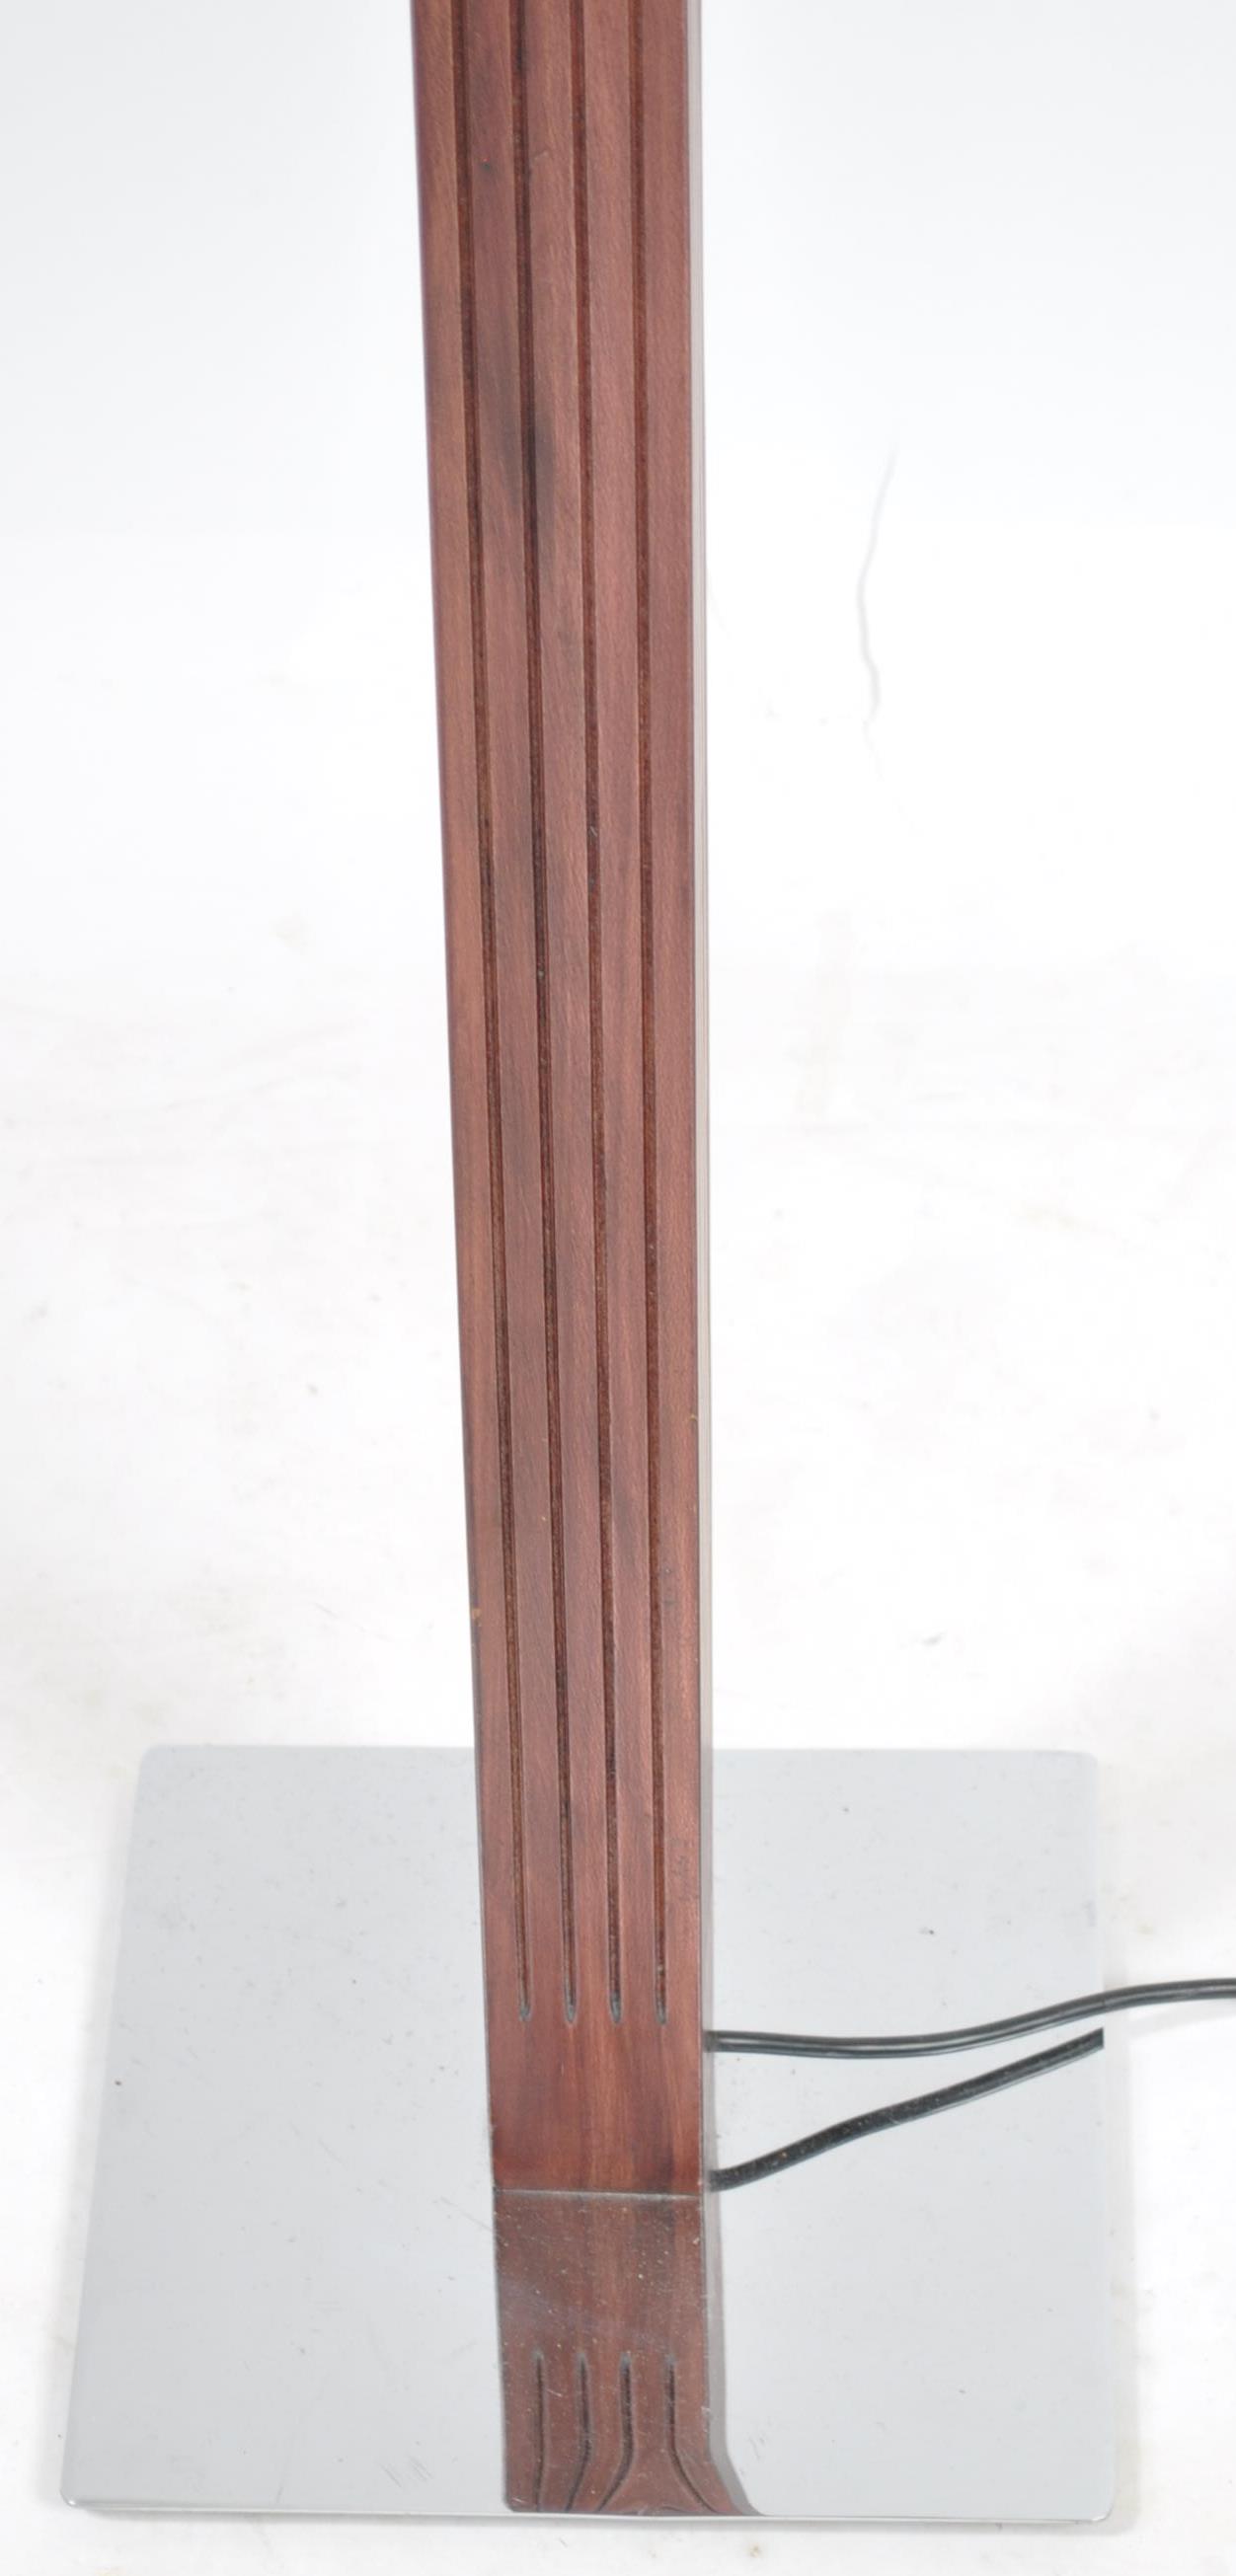 CONTEMPORARY FLOOR STANDING STANDARD LAMP - Image 4 of 5